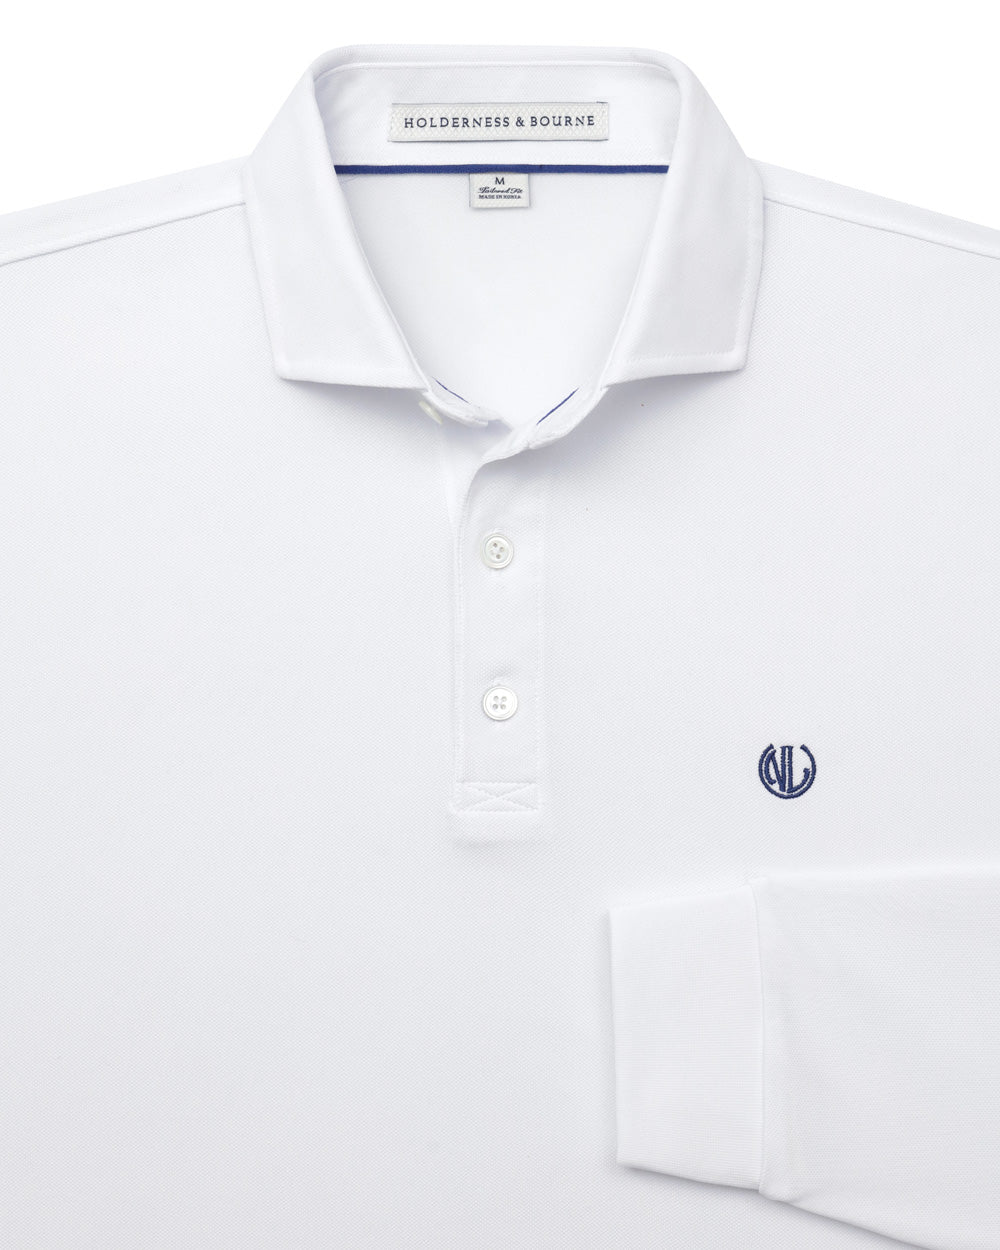 NLU + H&B Long Sleeve Polo | White